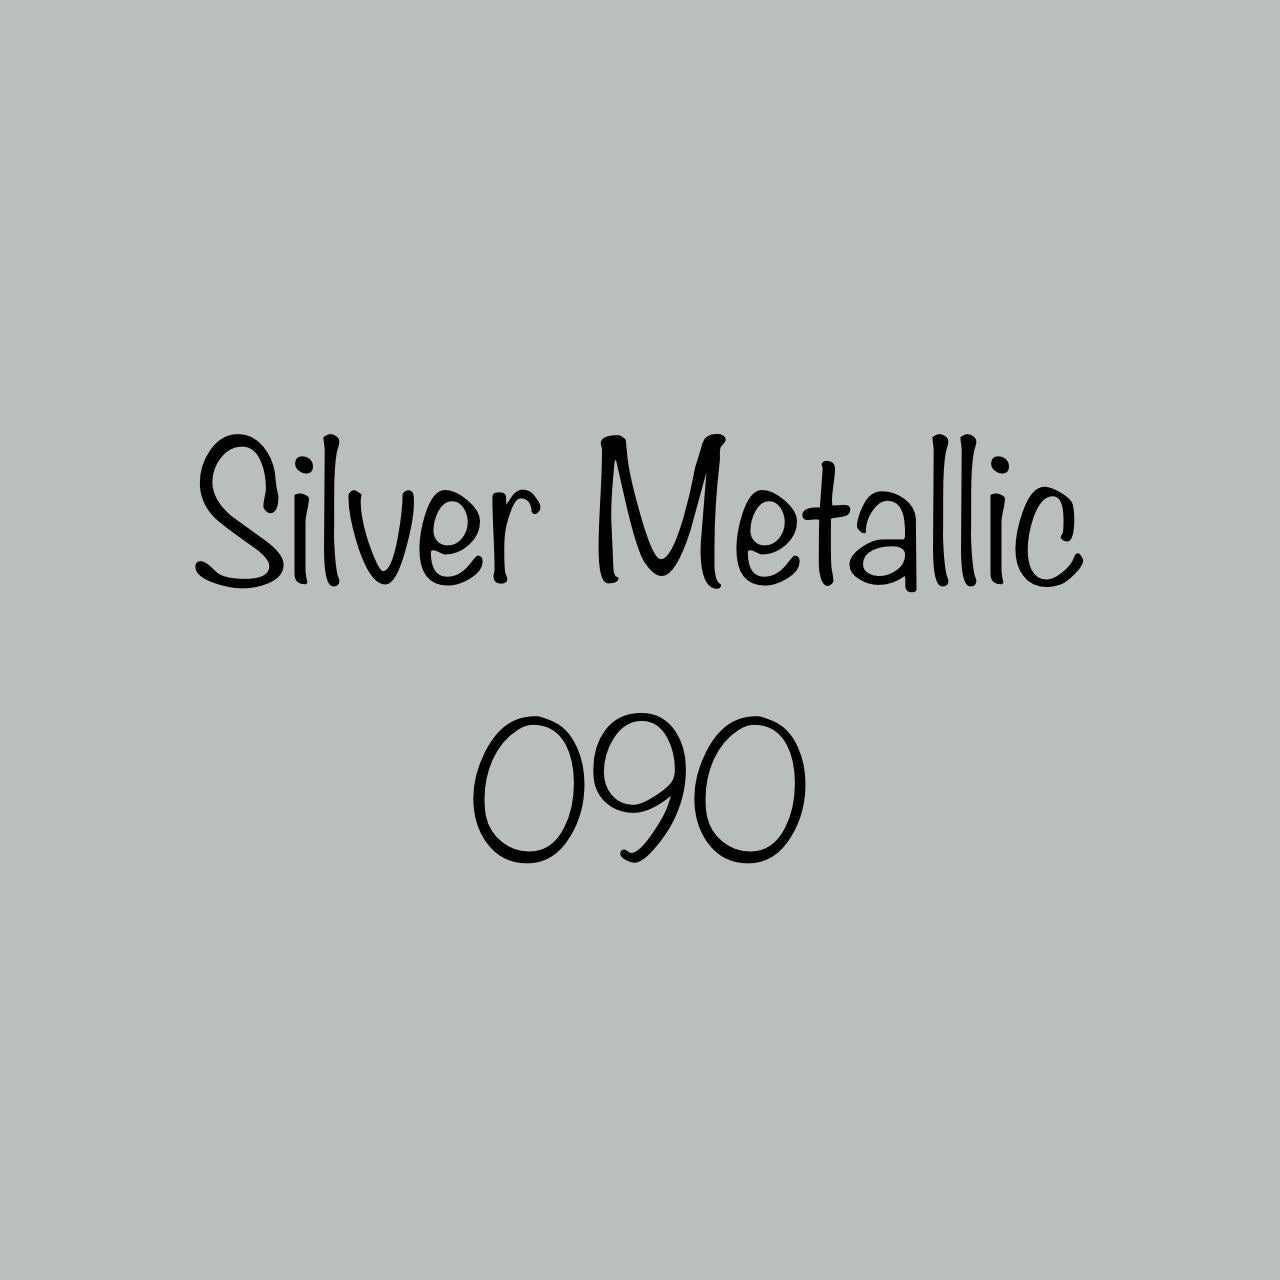 Oracal 651 Permanent Vinyl Silver Metallic (090)